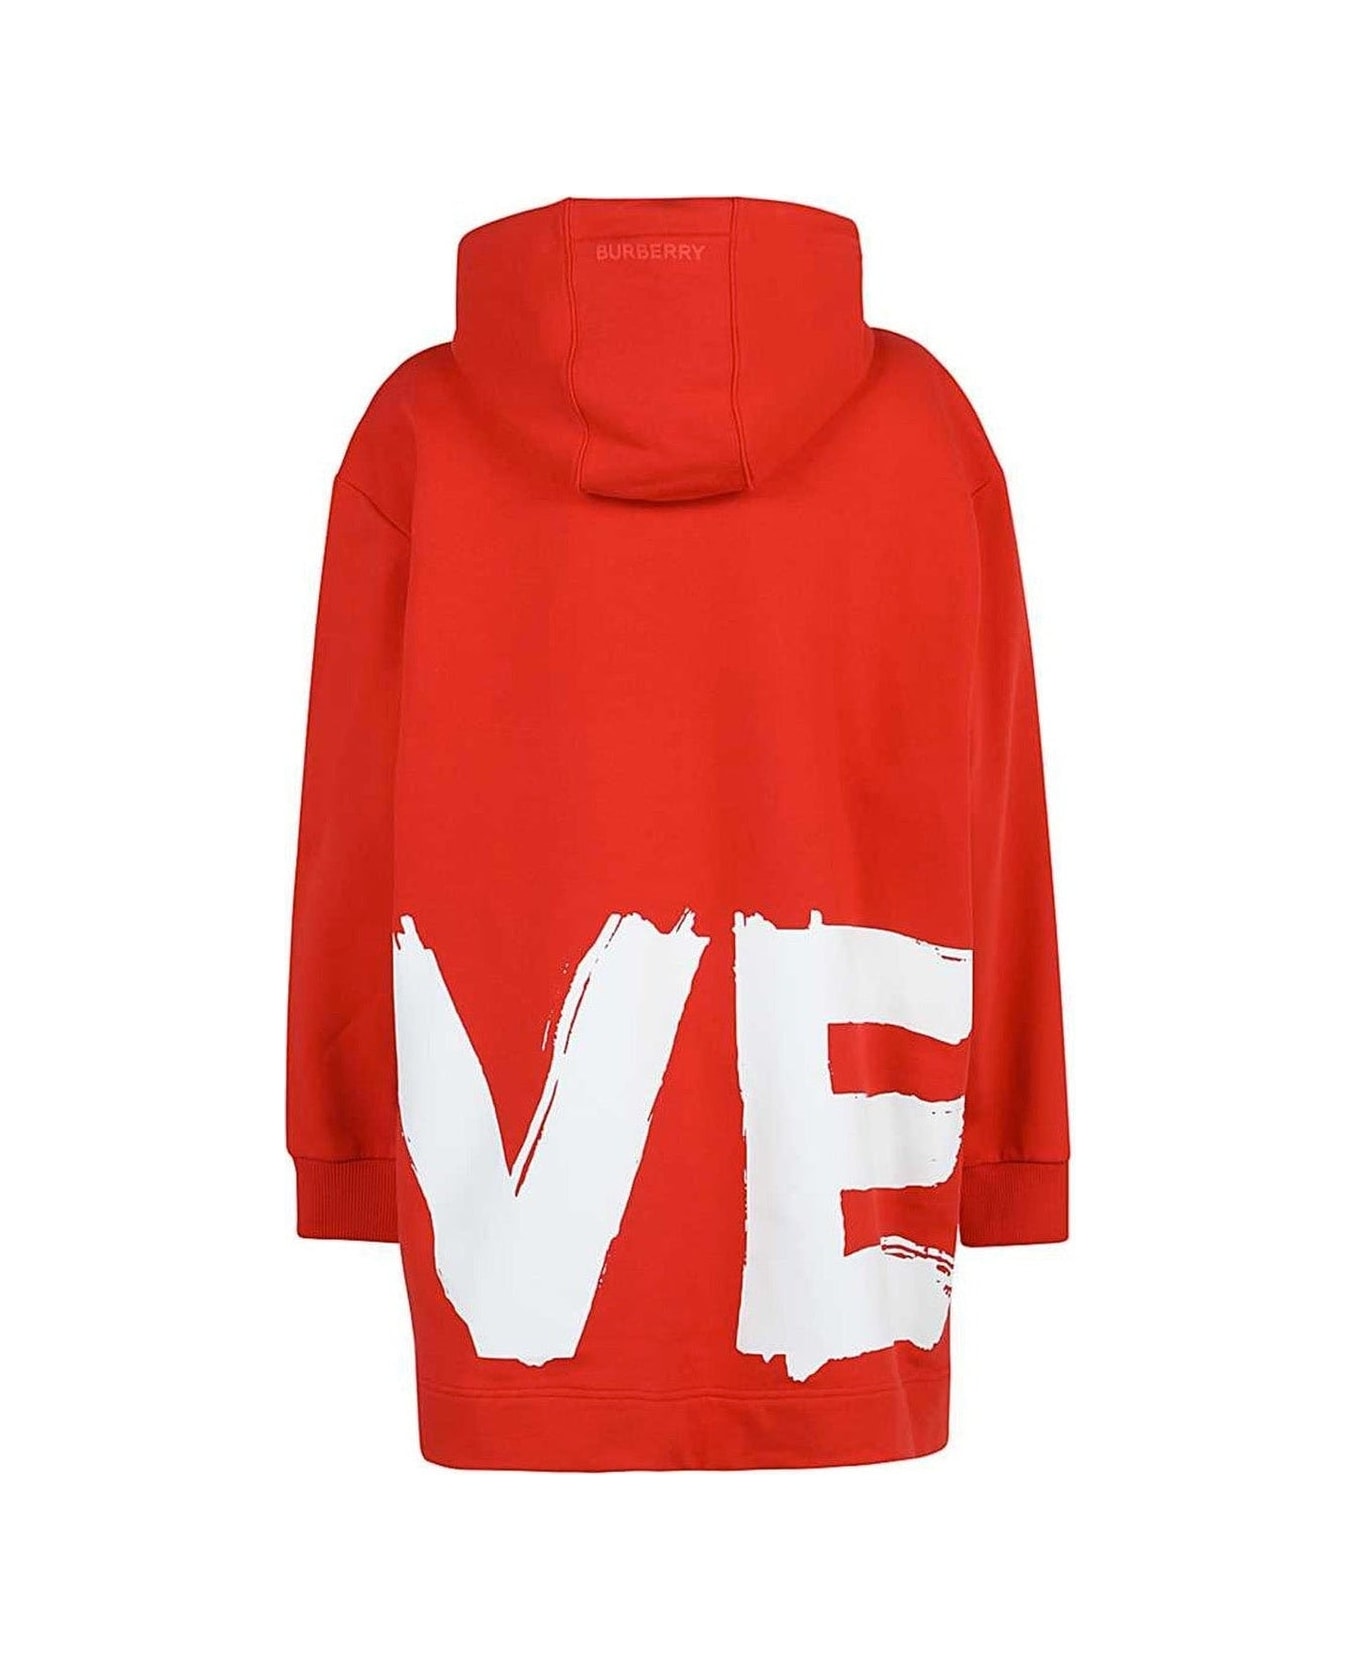 Burberry Aurore Love Hooded Sweatshirt - Red